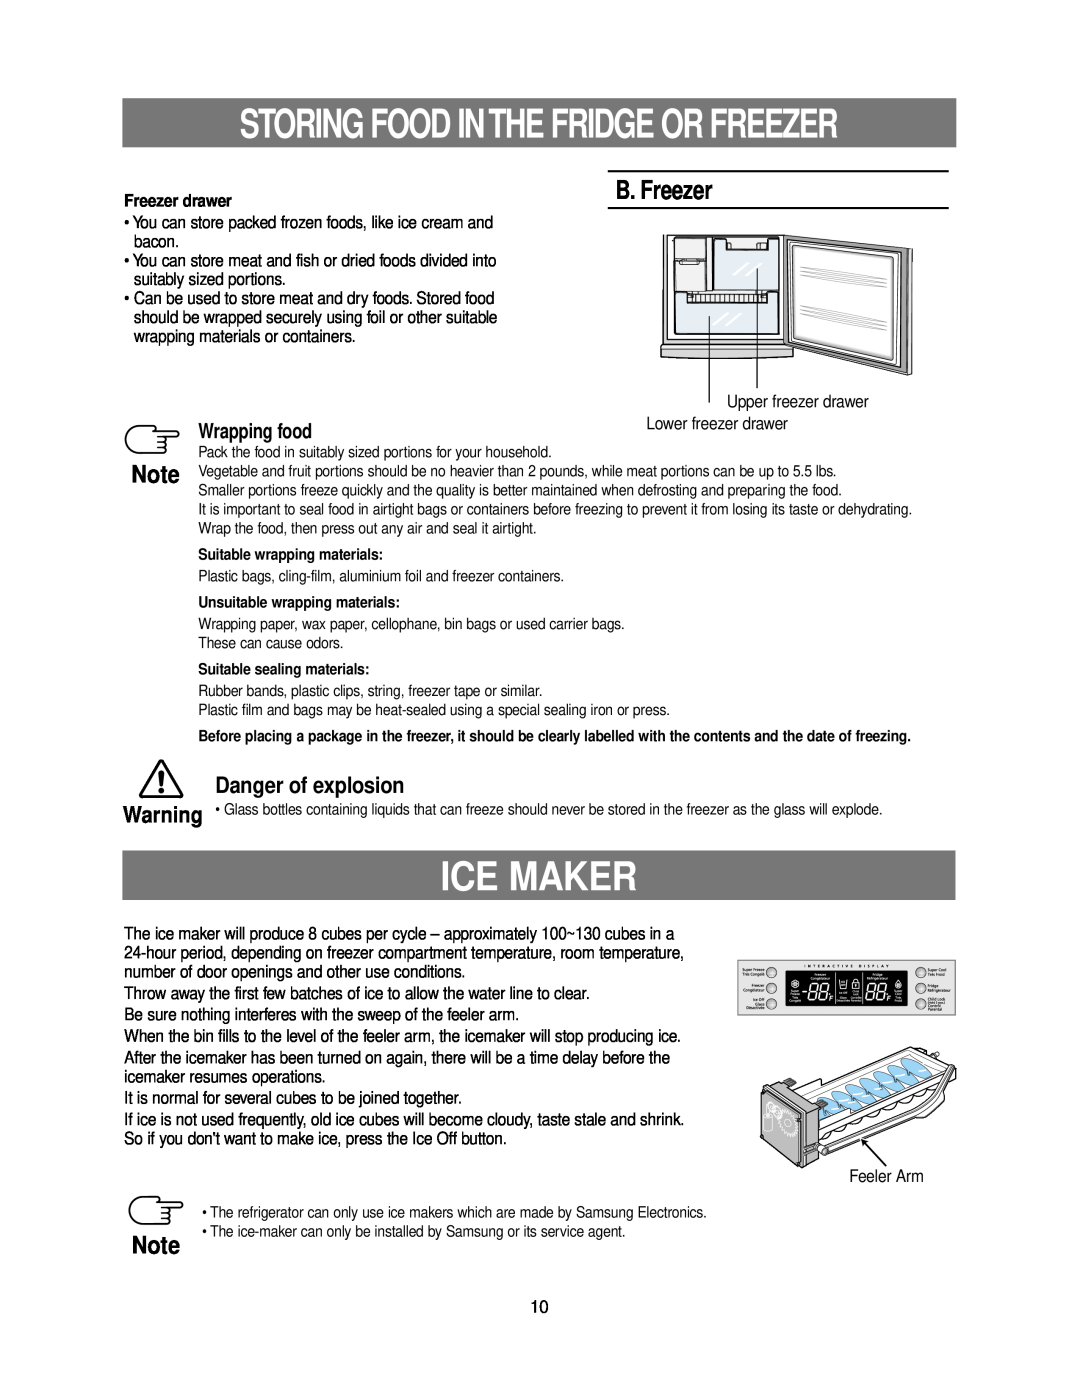 Samsung RB215LA, RB195LA owner manual Ice Maker, B. Freezer, Danger of explosion, Wrapping food, Freezer drawer 